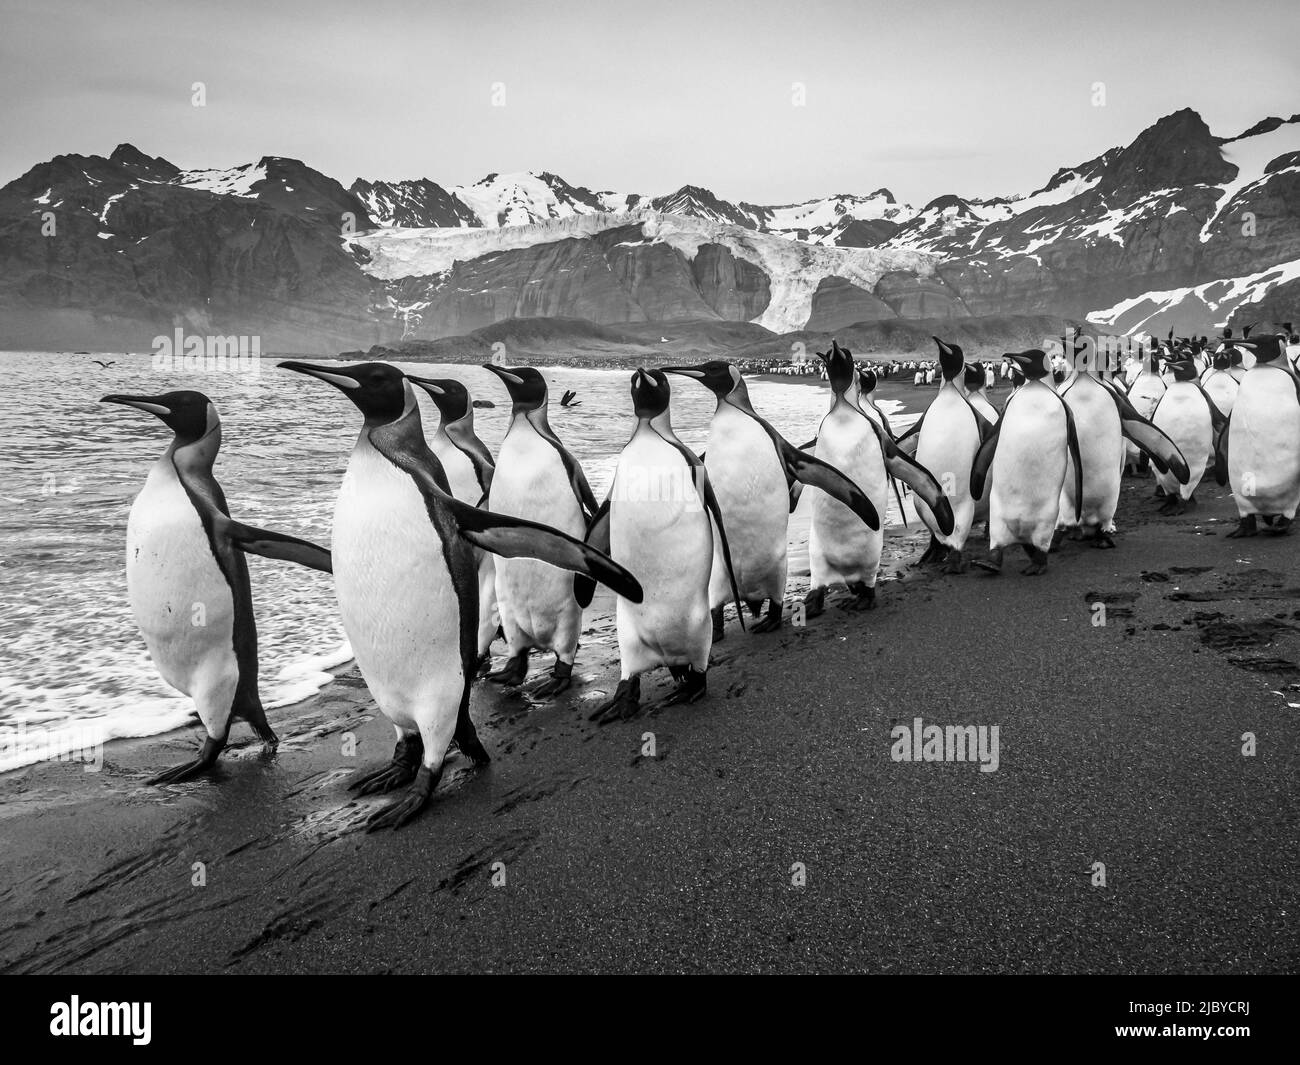 King Penguins (Aptenodytes patagonicus) gather along the shoreline at Gold Harbor, South Georgia Stock Photo